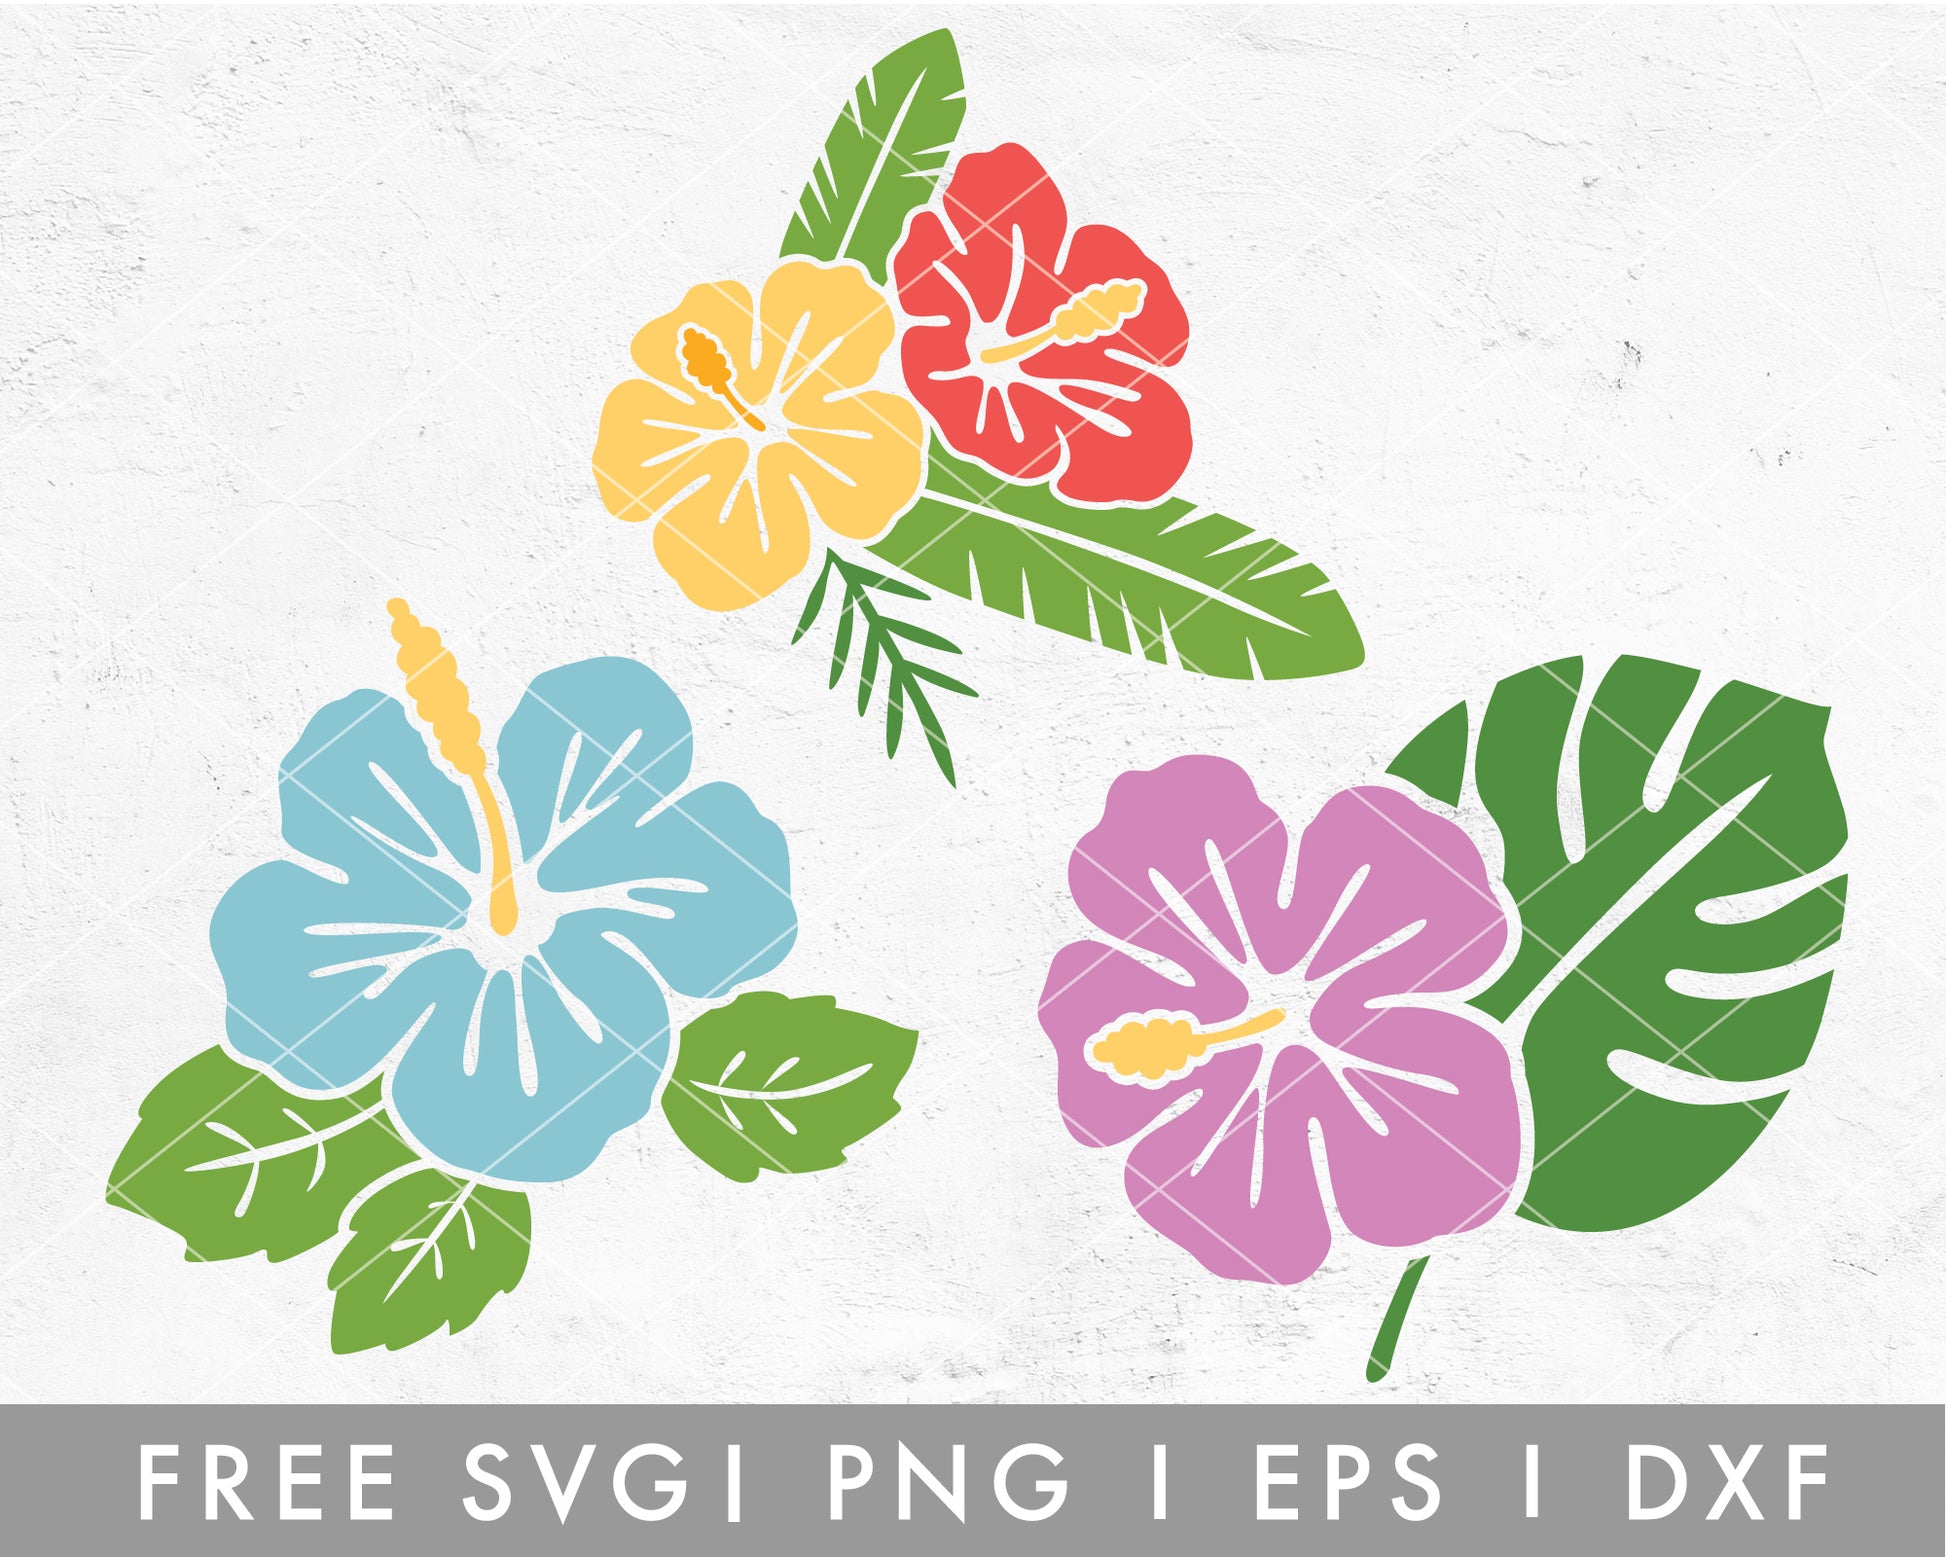 Bookmark Template SVG, Hibiscus Flower SVG, Hawaii SVG